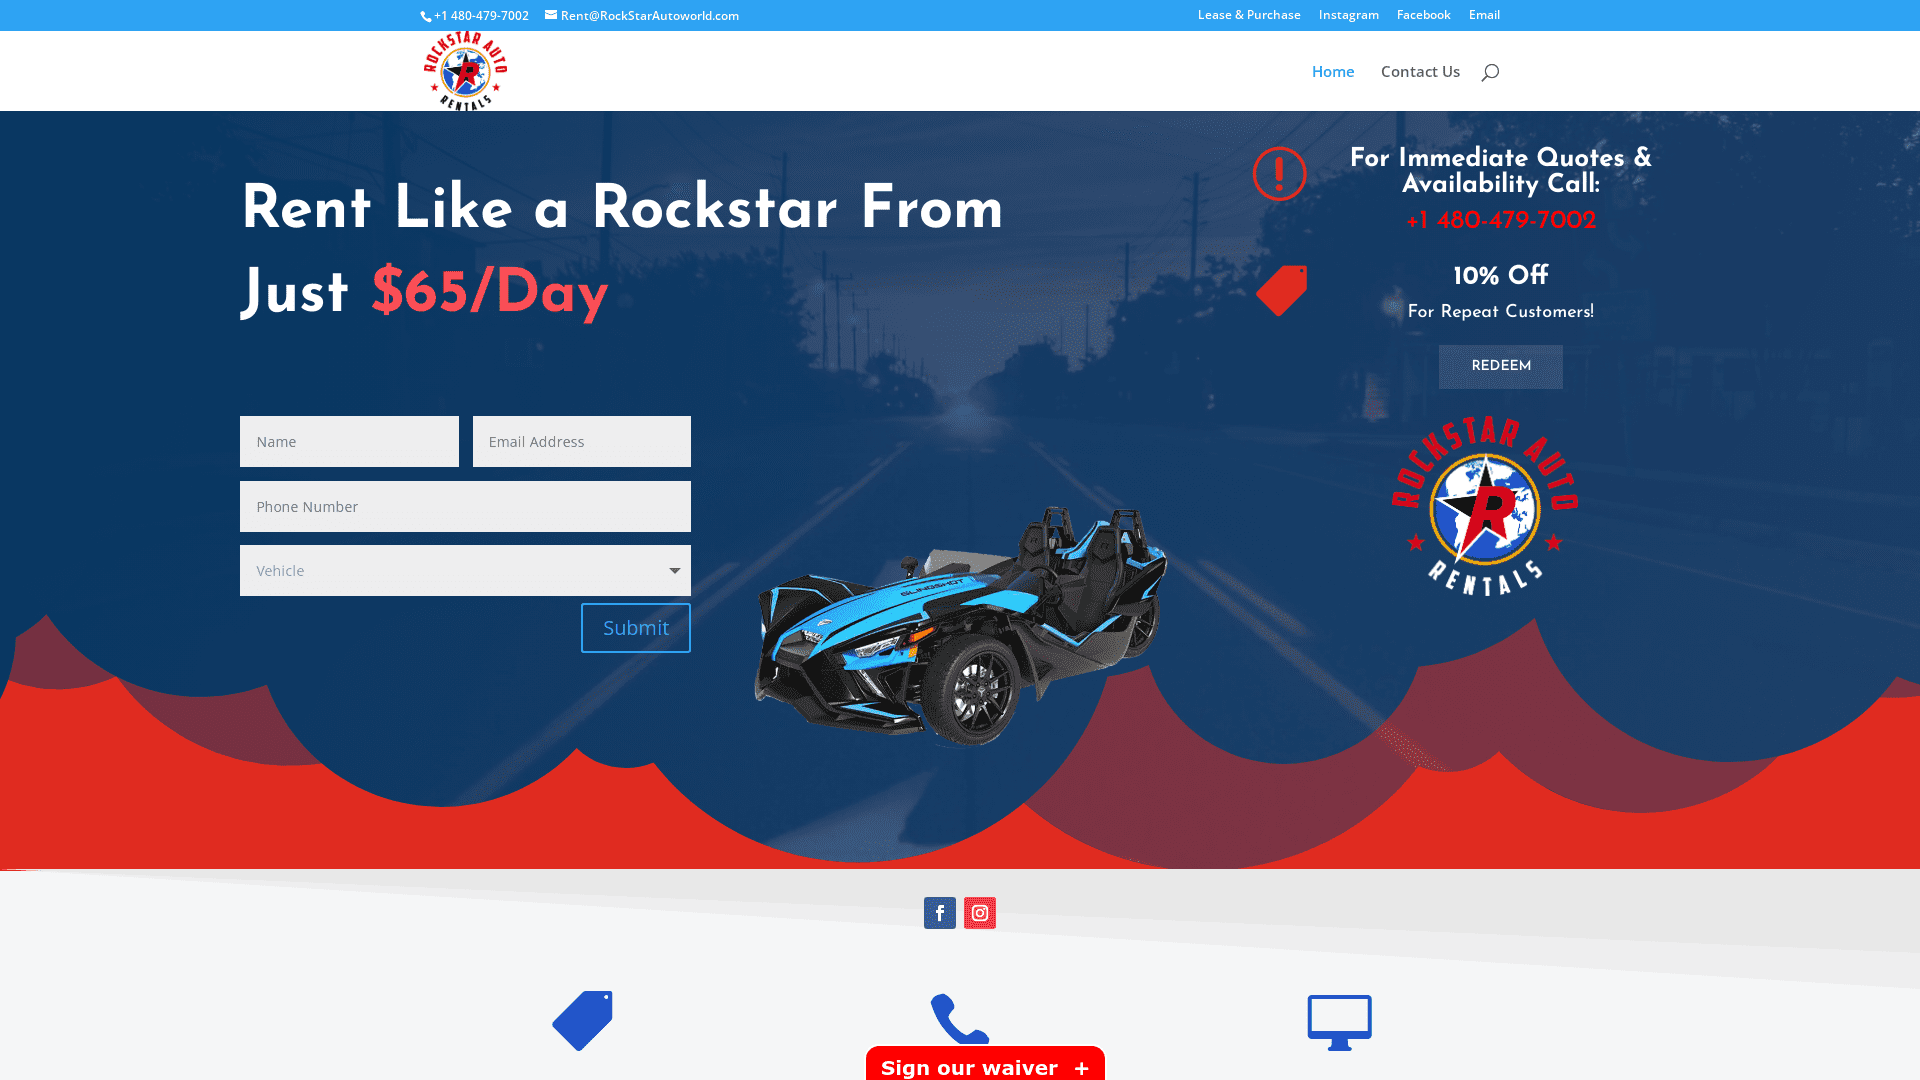 Rockstar Auto Rentals Homepage Design